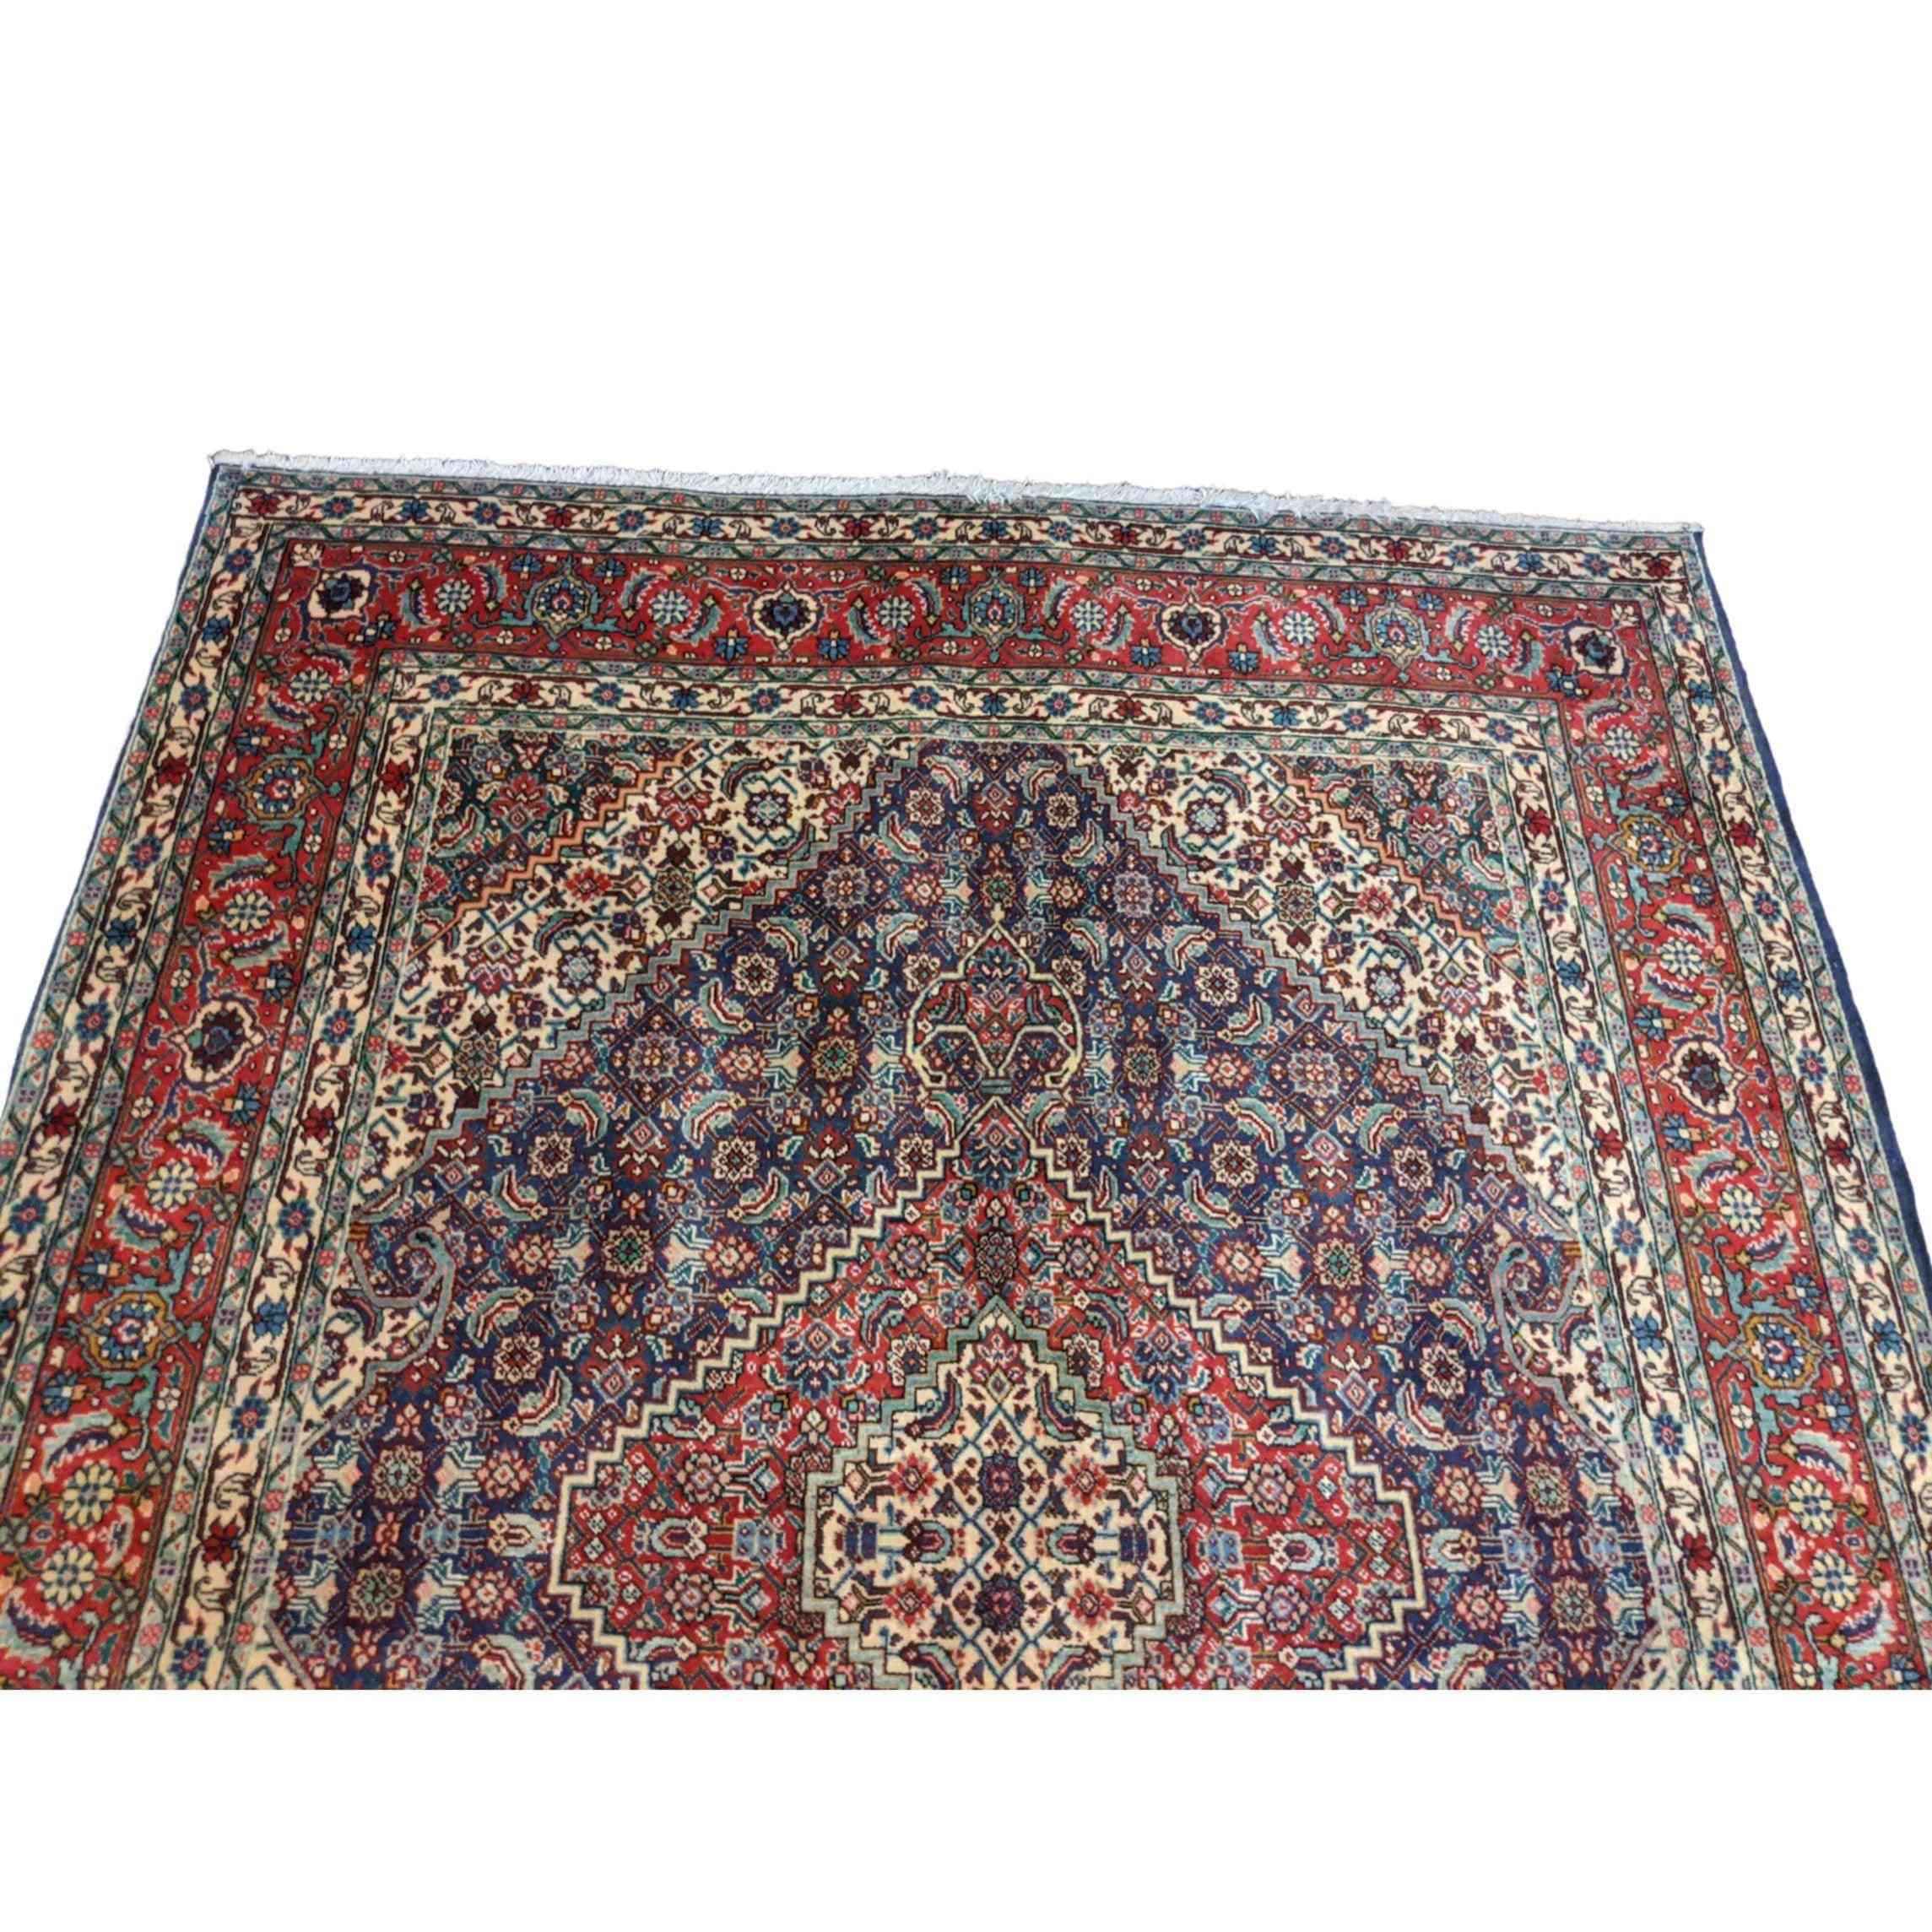 198 x 147 cm Persian Handmade Qum Traditional Red Rug - Rugmaster